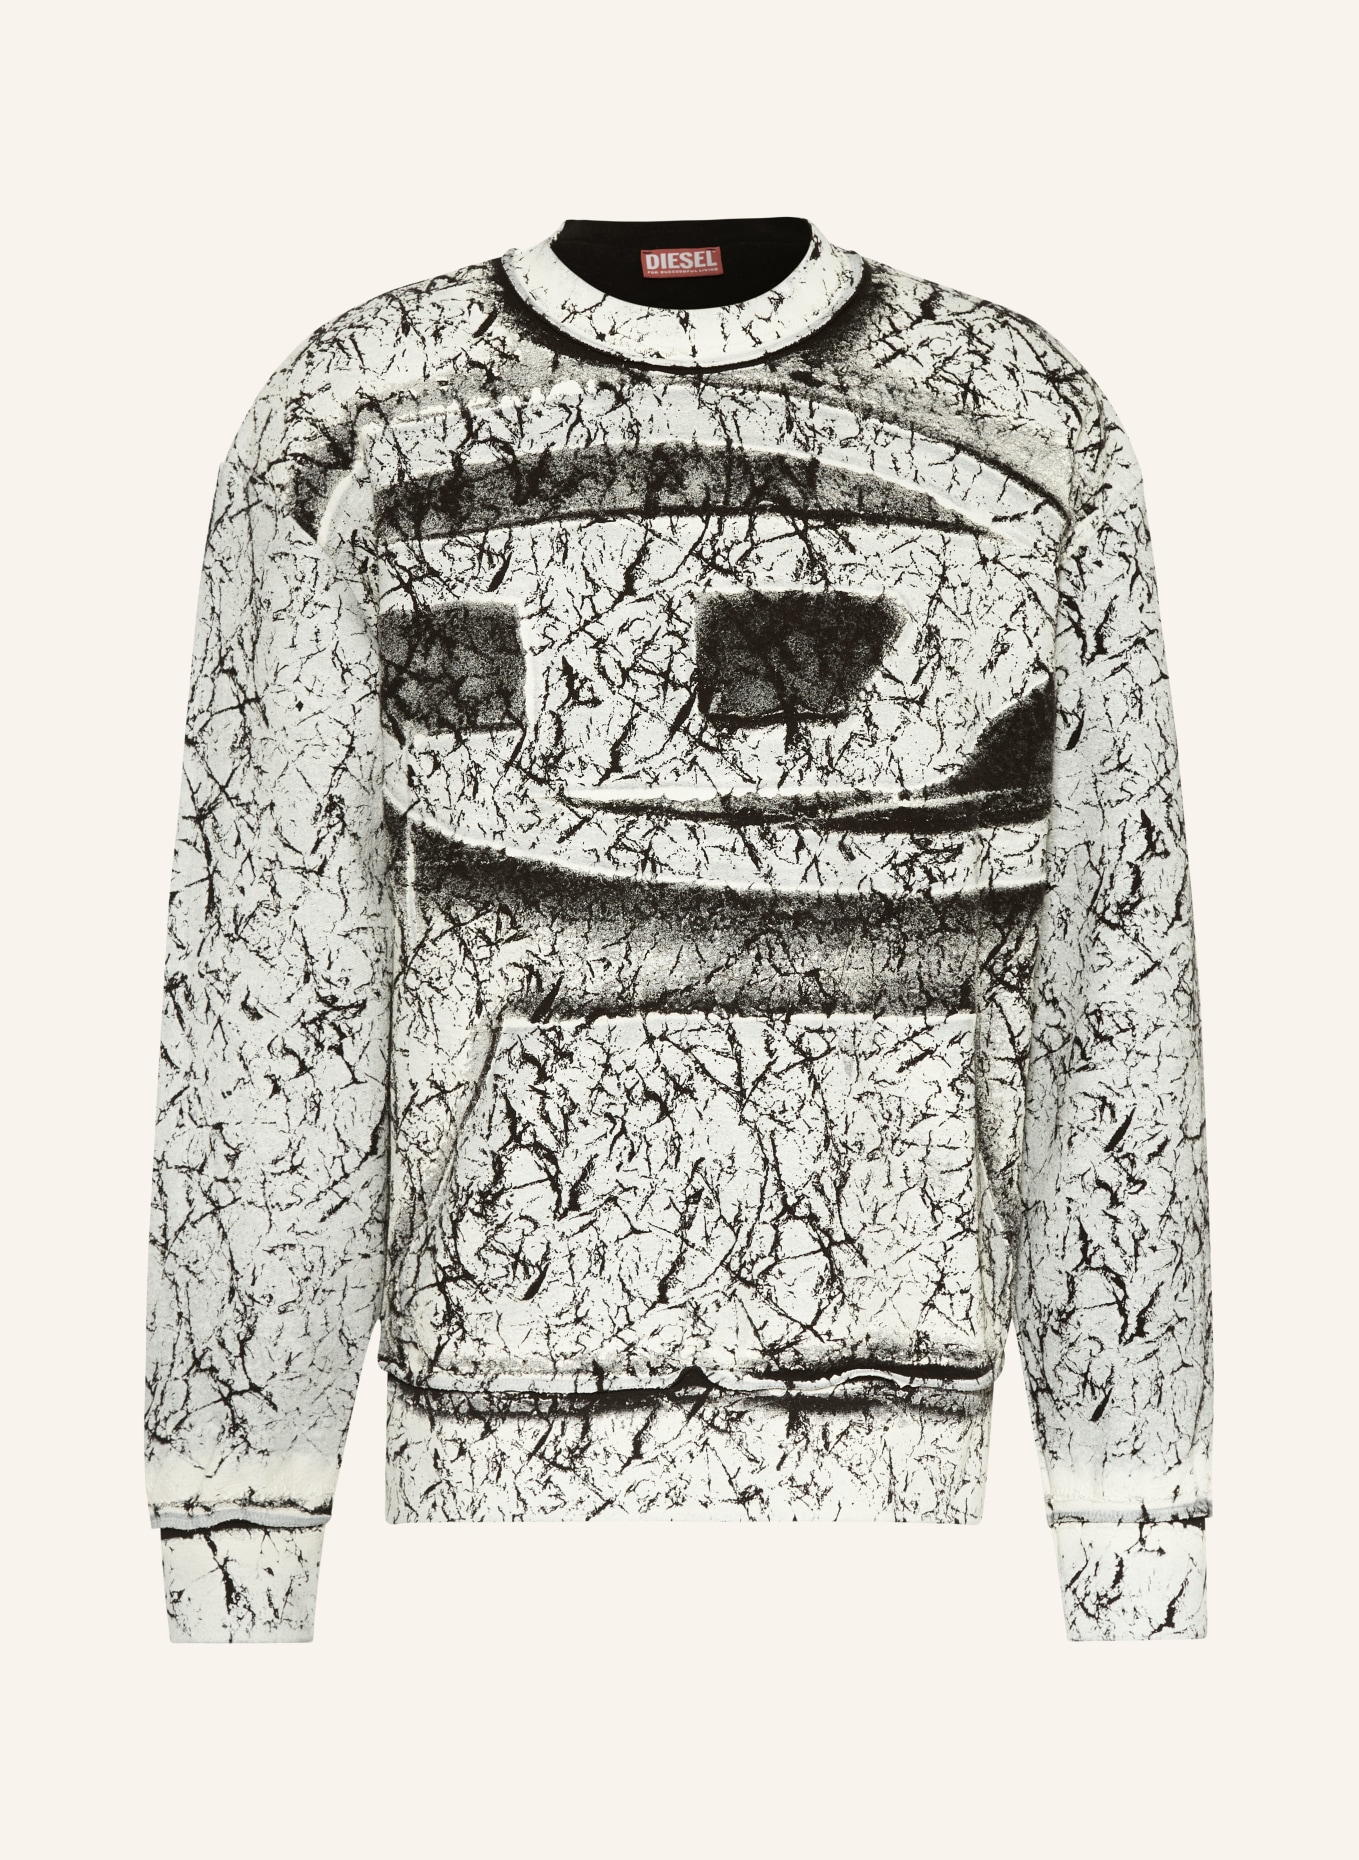 DIESEL Sweatshirt MACOVAL, Farbe: SCHWARZ/ GRAU (Bild 1)